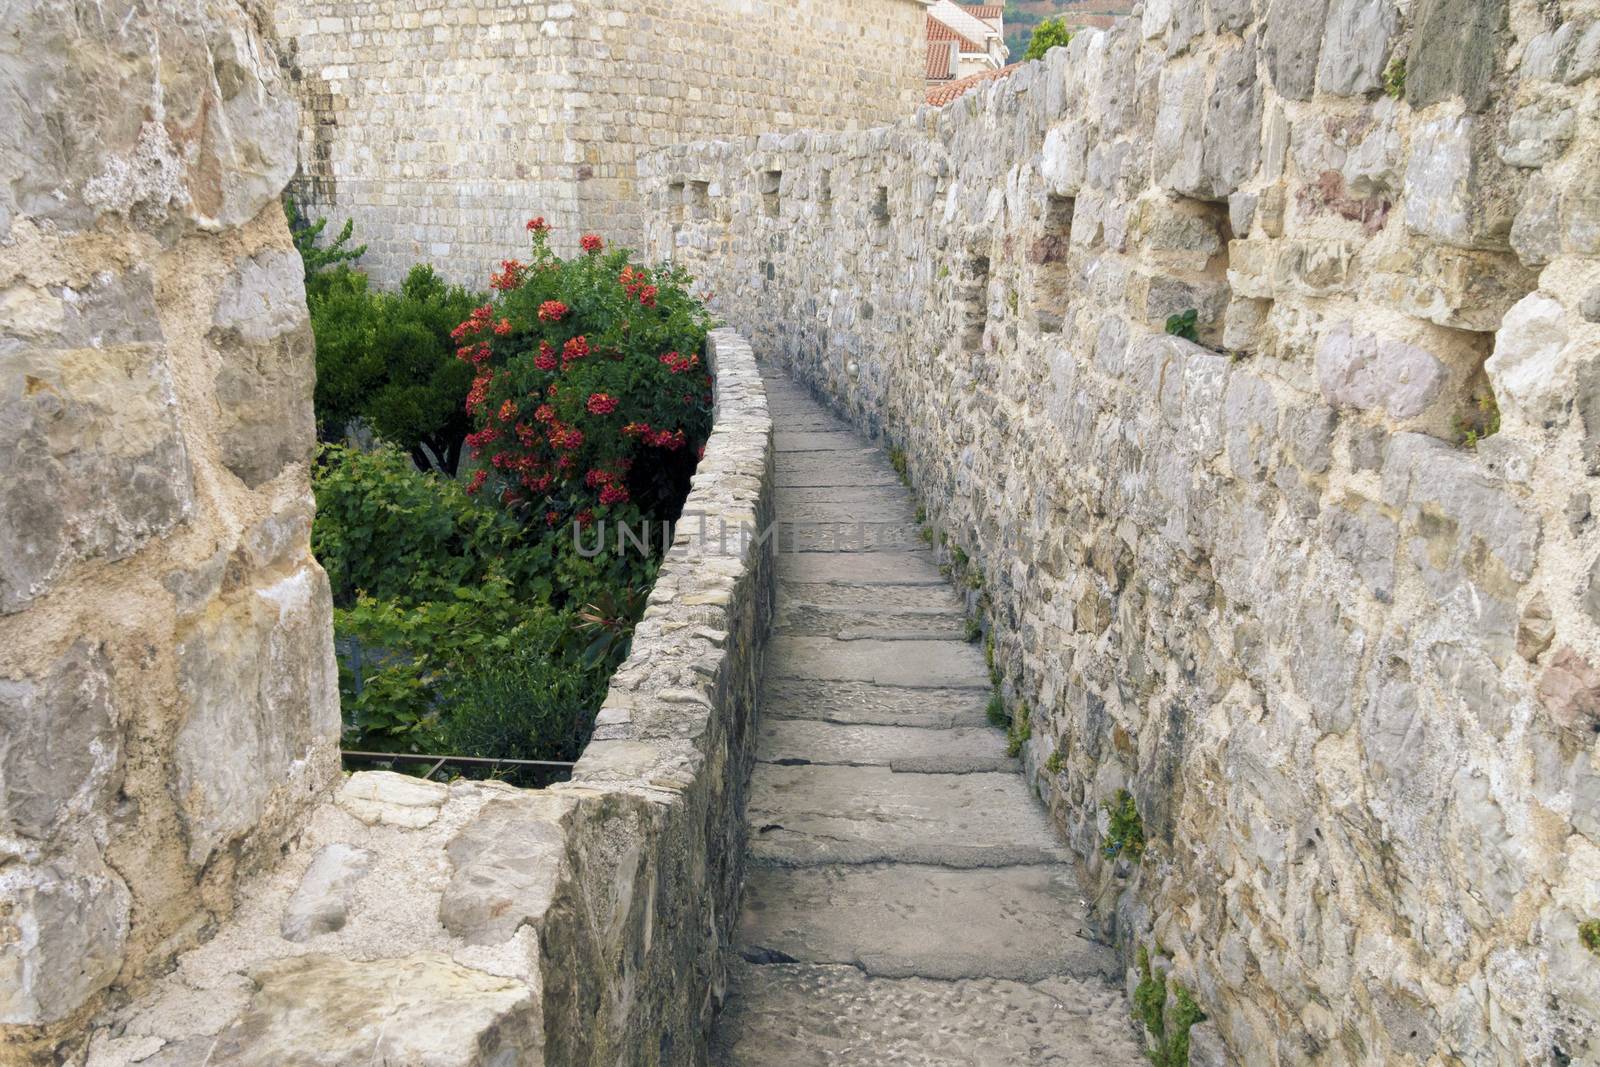 scenic stone pathway in Old City of Budva, Montenegro